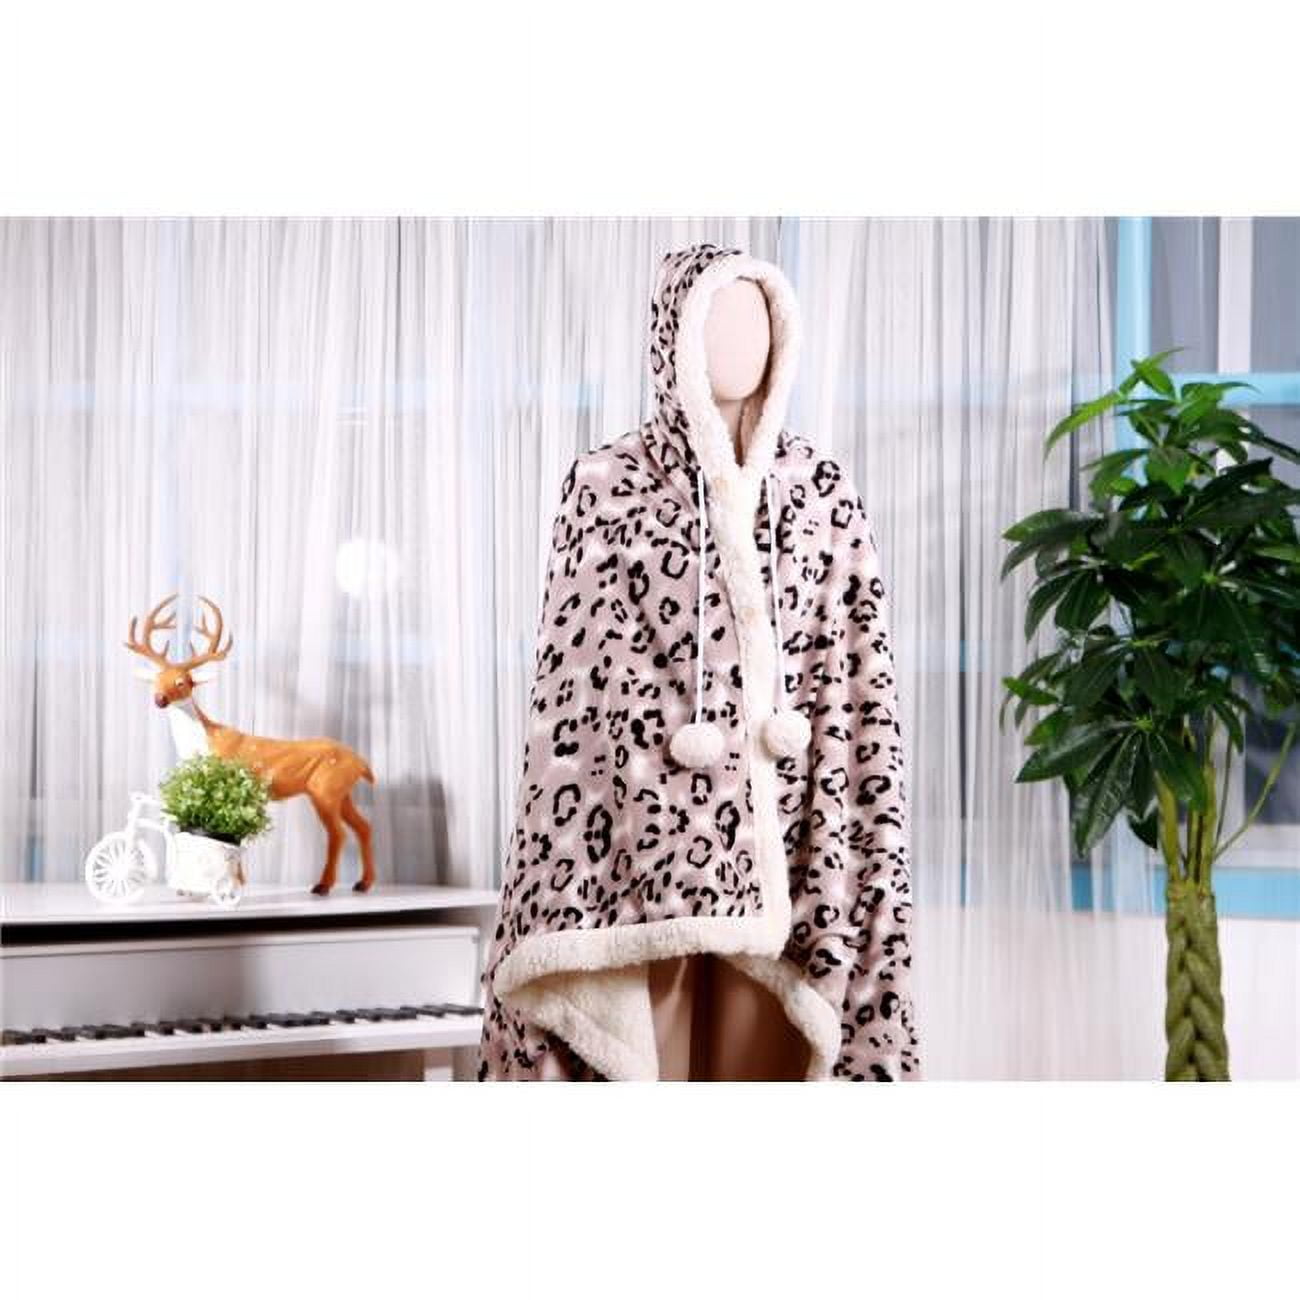 Hs3307-us Agot Ultra Plush Sherpa Lined Snuggle Up Animal Print Hoodie Wearable Blanket 51 X 71 In. Robe Hoodie, Black